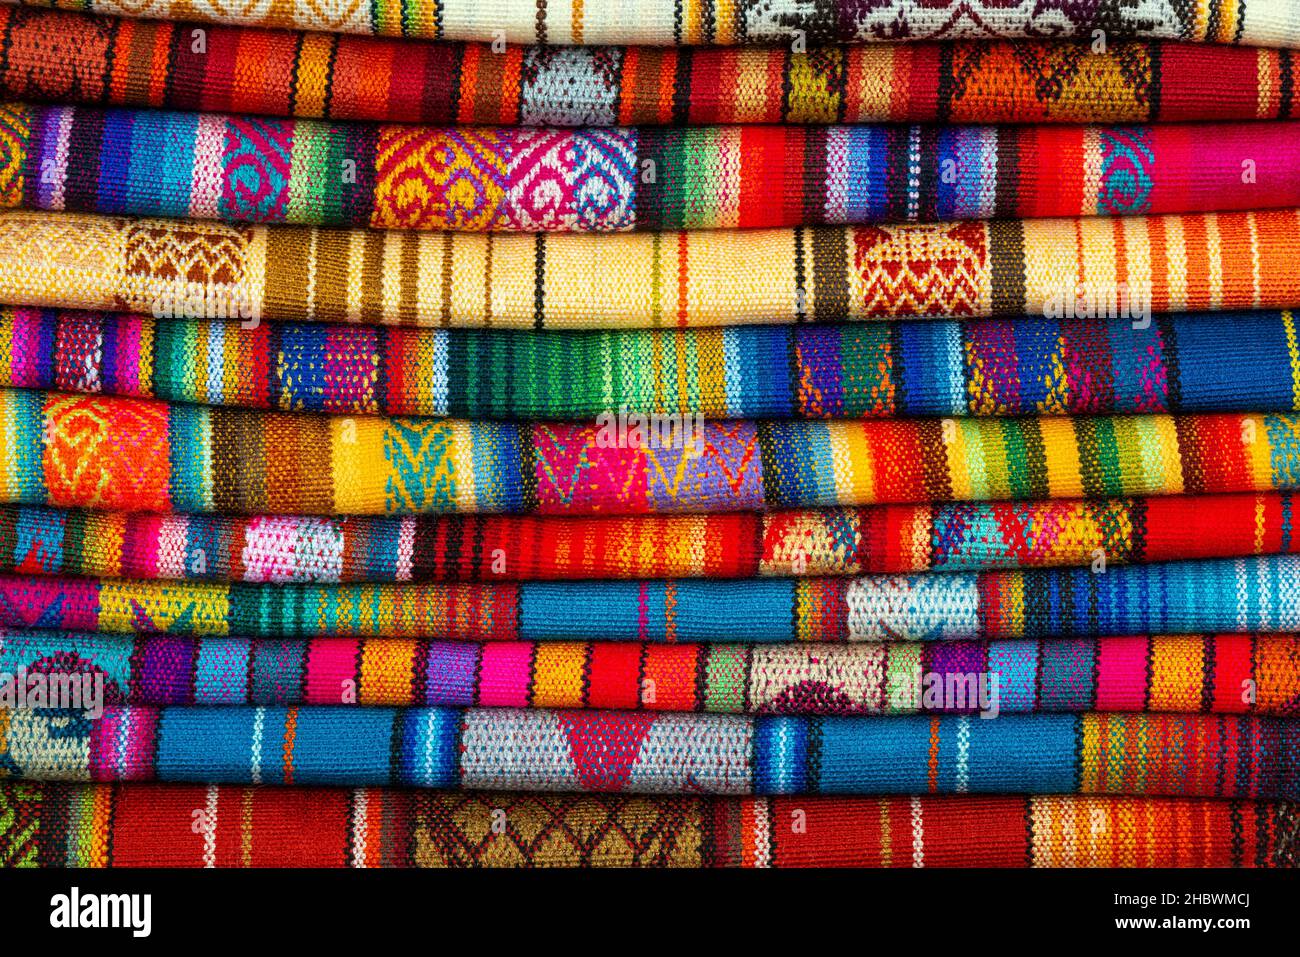 Pila de tela andina en el mercado artesanal de Otavalo cerca de Quito, Ecuador. Foto de stock